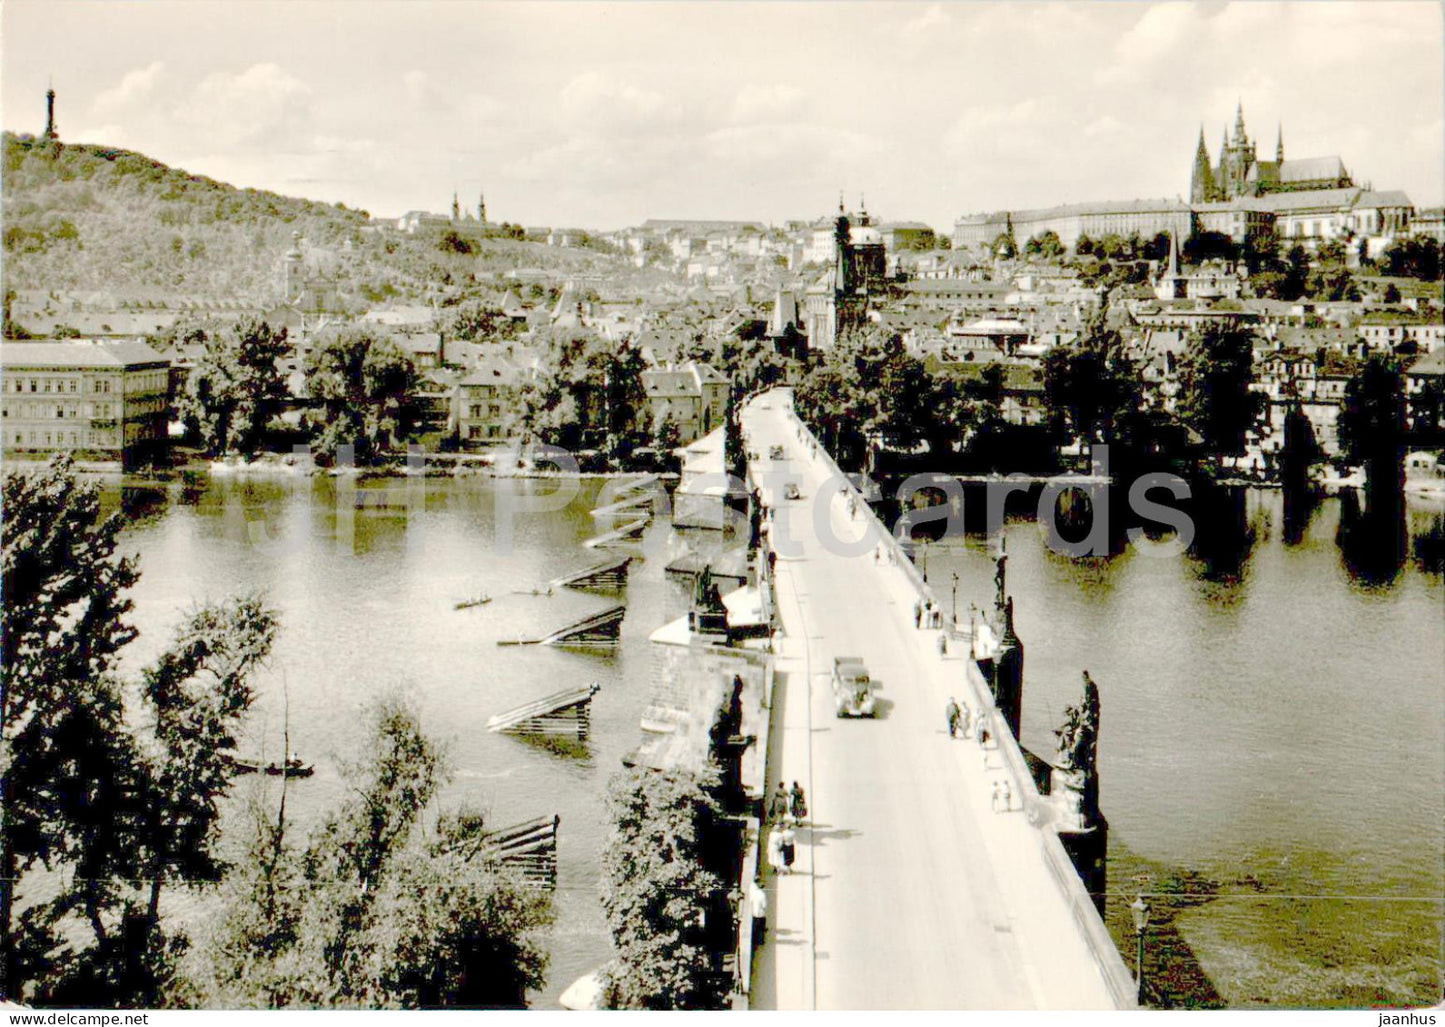 Praha - Prague - Mala Strana Quarter - General view - Charles Bridge - 1967 - Czech Republic - Czechoslovakia - used - JH Postcards